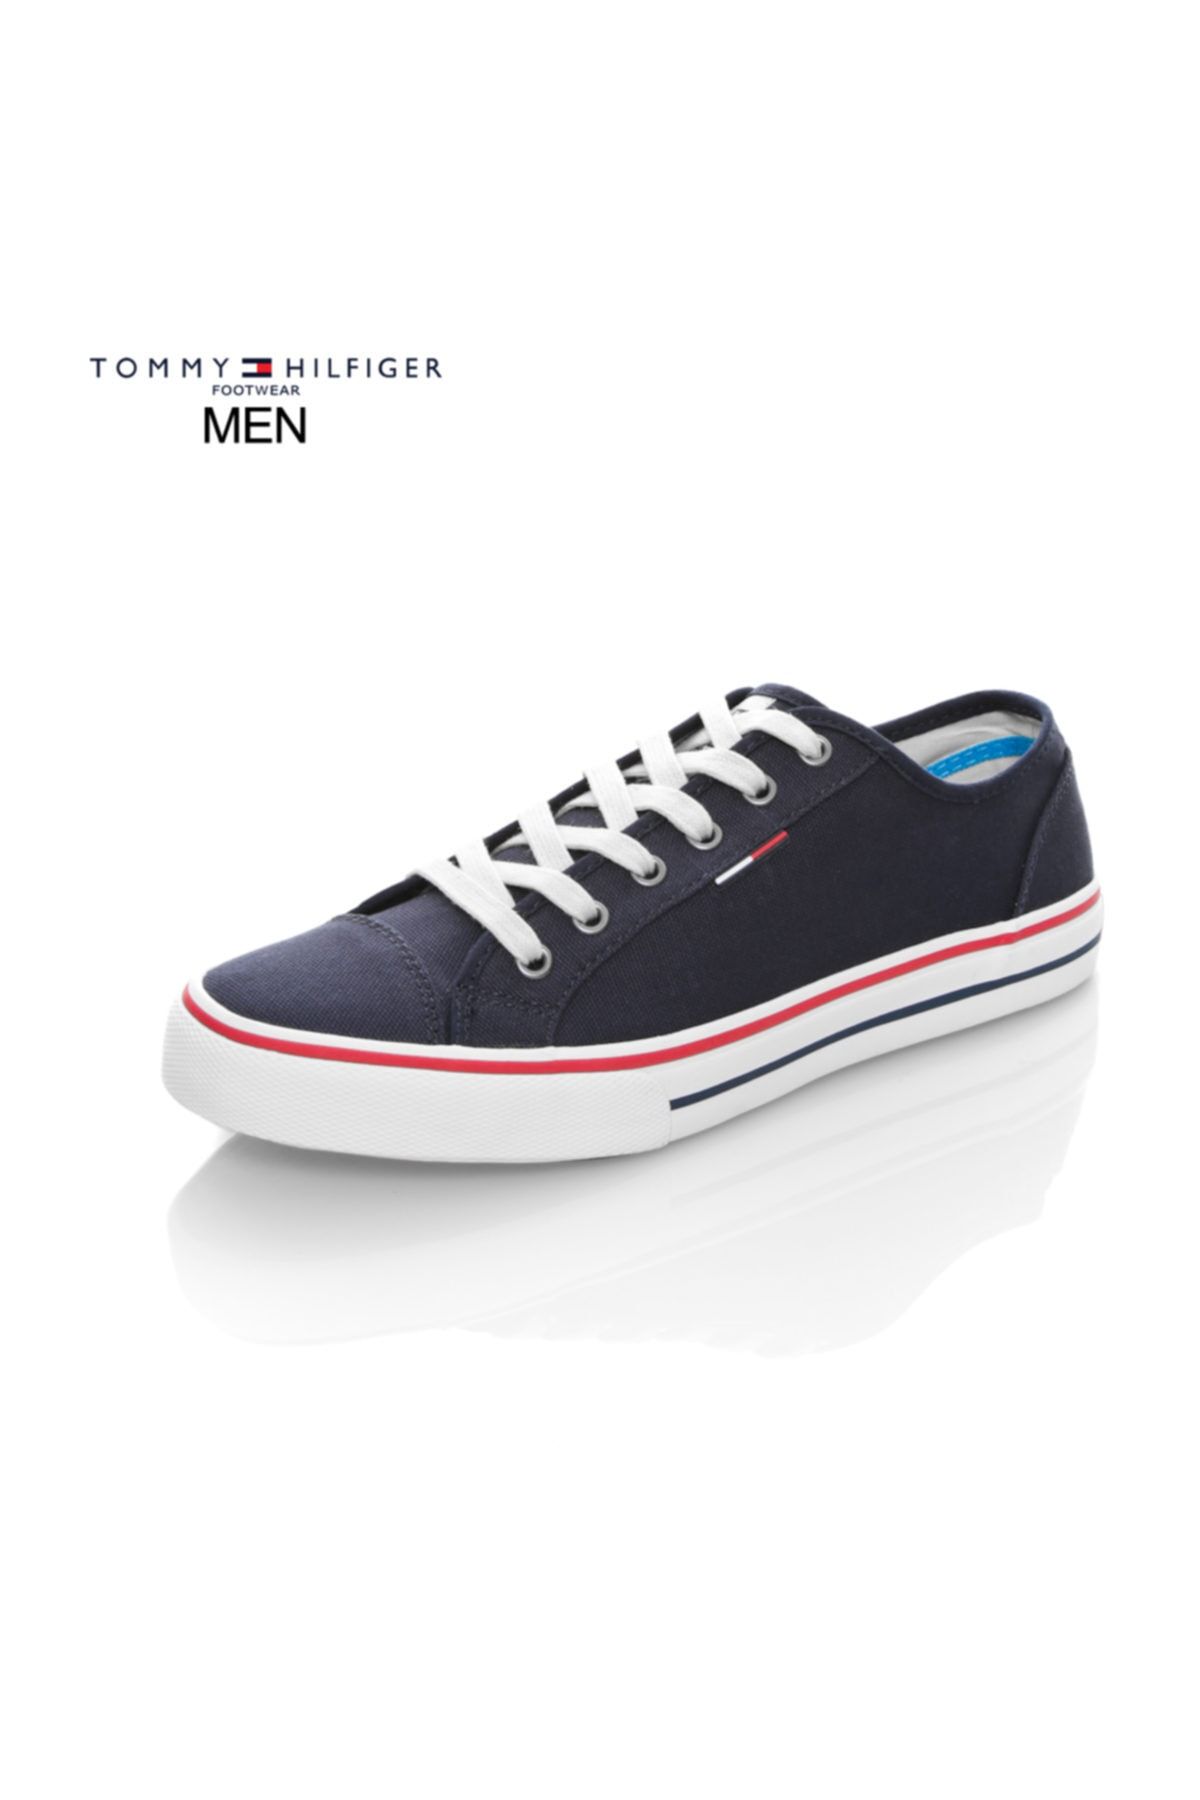 Tommy Hilfiger Lacivert Erkek Fm0fm00324 006 Exclusıve V2385ıc 11d Sneakers Low Cut Ink